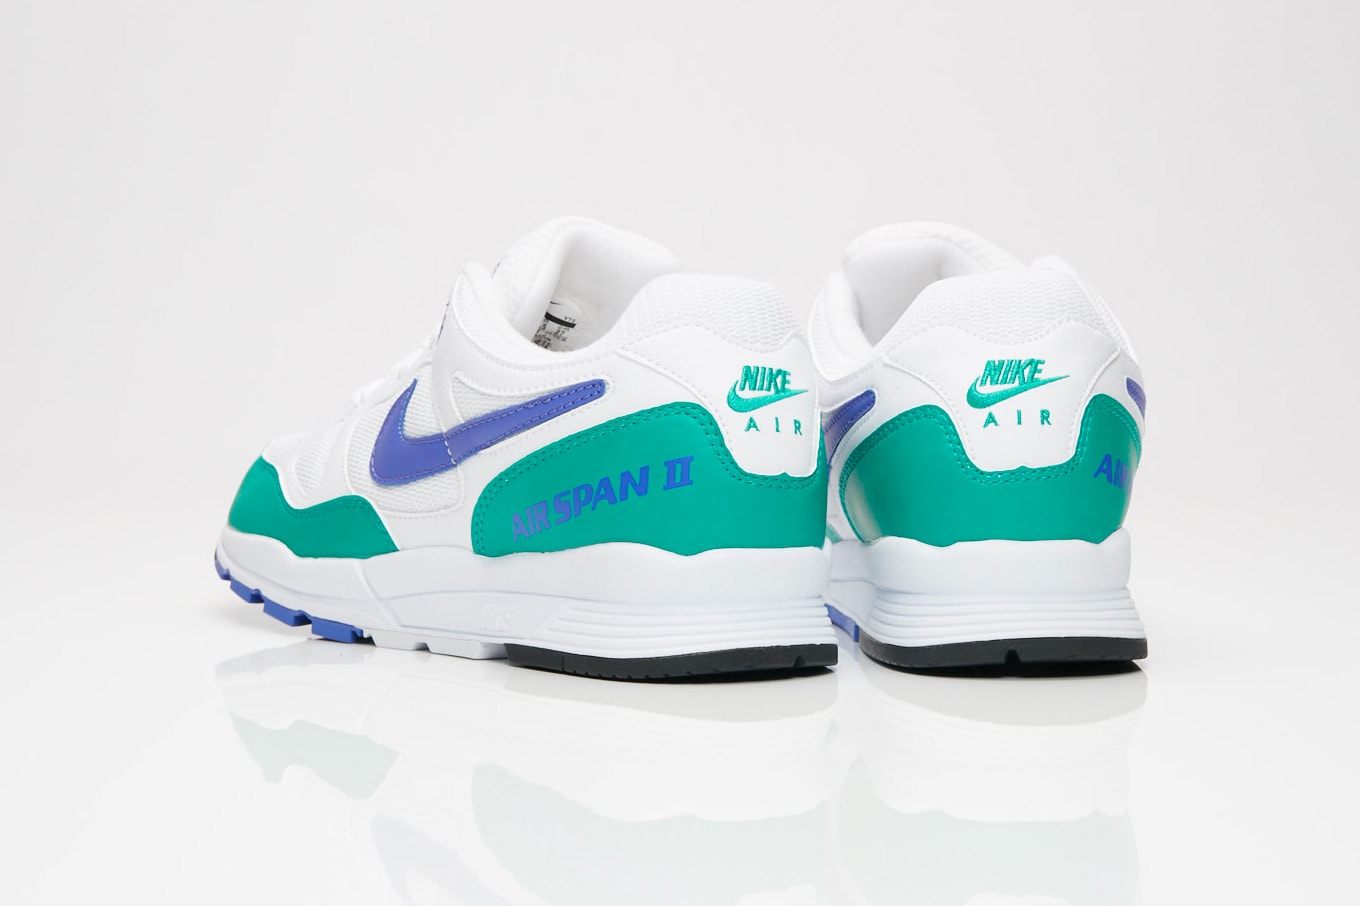 Nike Air Span II "Persian Violet/Neptune Green" release date sneaker colorway price purchase